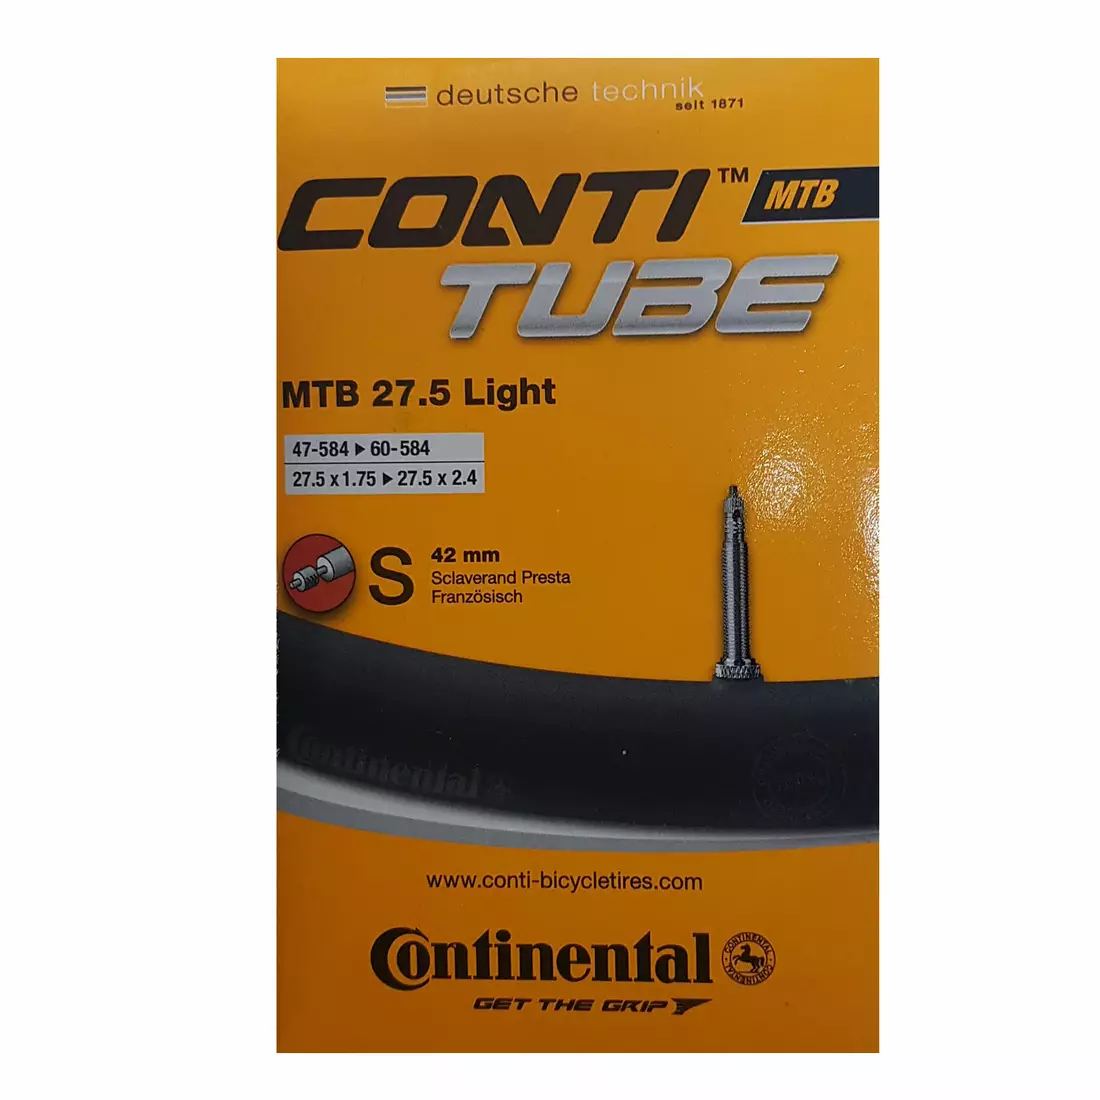 CONTINENTAL SS18 bicycle tube MTB 27,5 Light presta 42mm 47-584/62-584 27,5x1,75-27,5x2,4